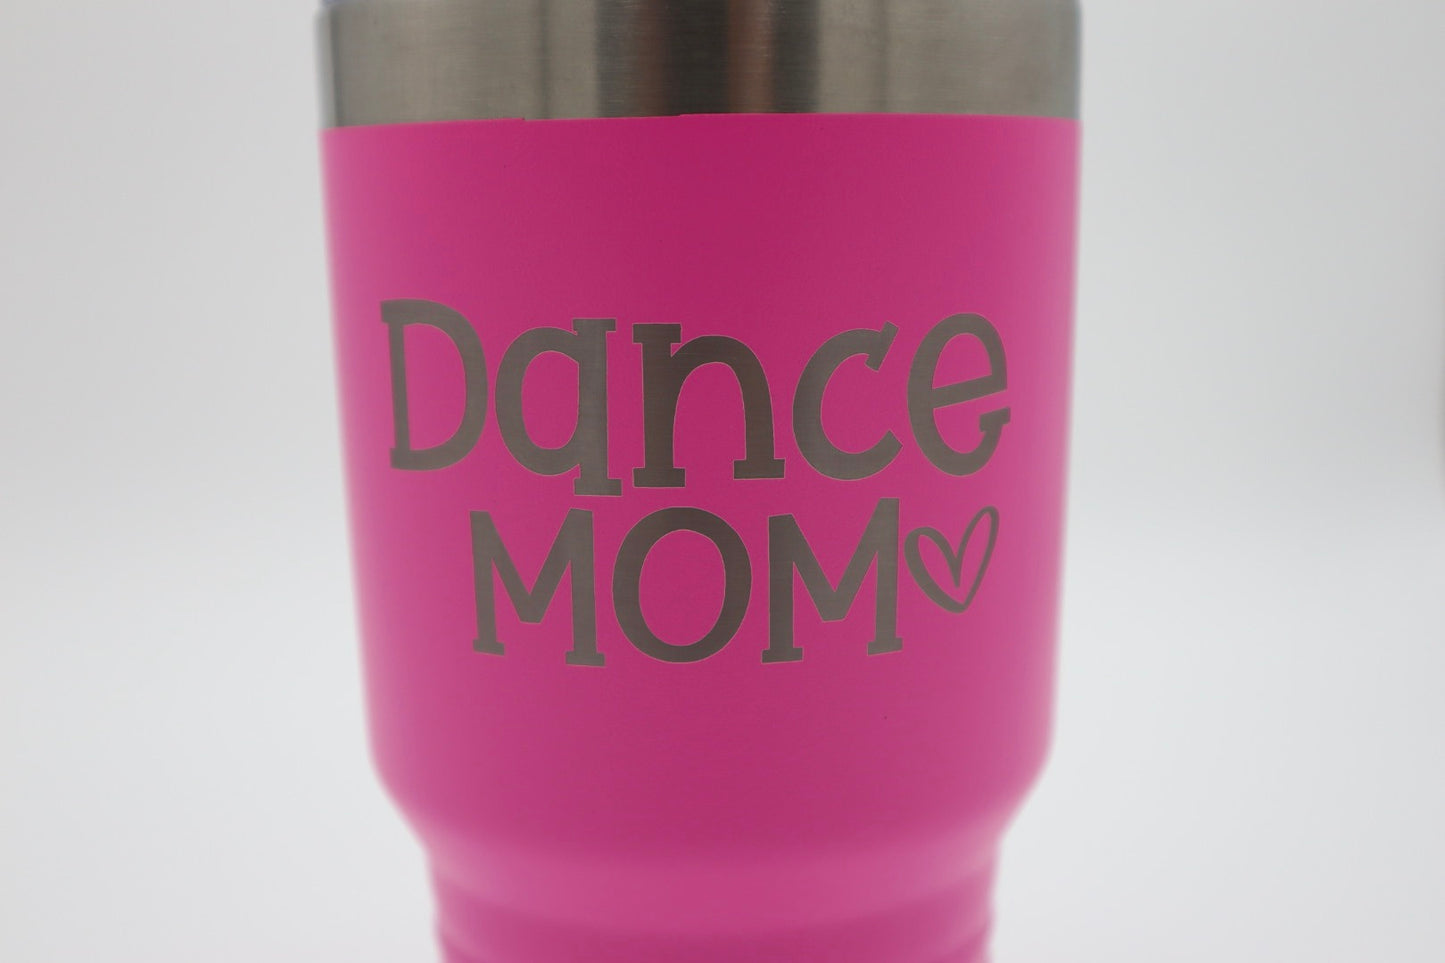 Dance Mom 30oz Tumbler